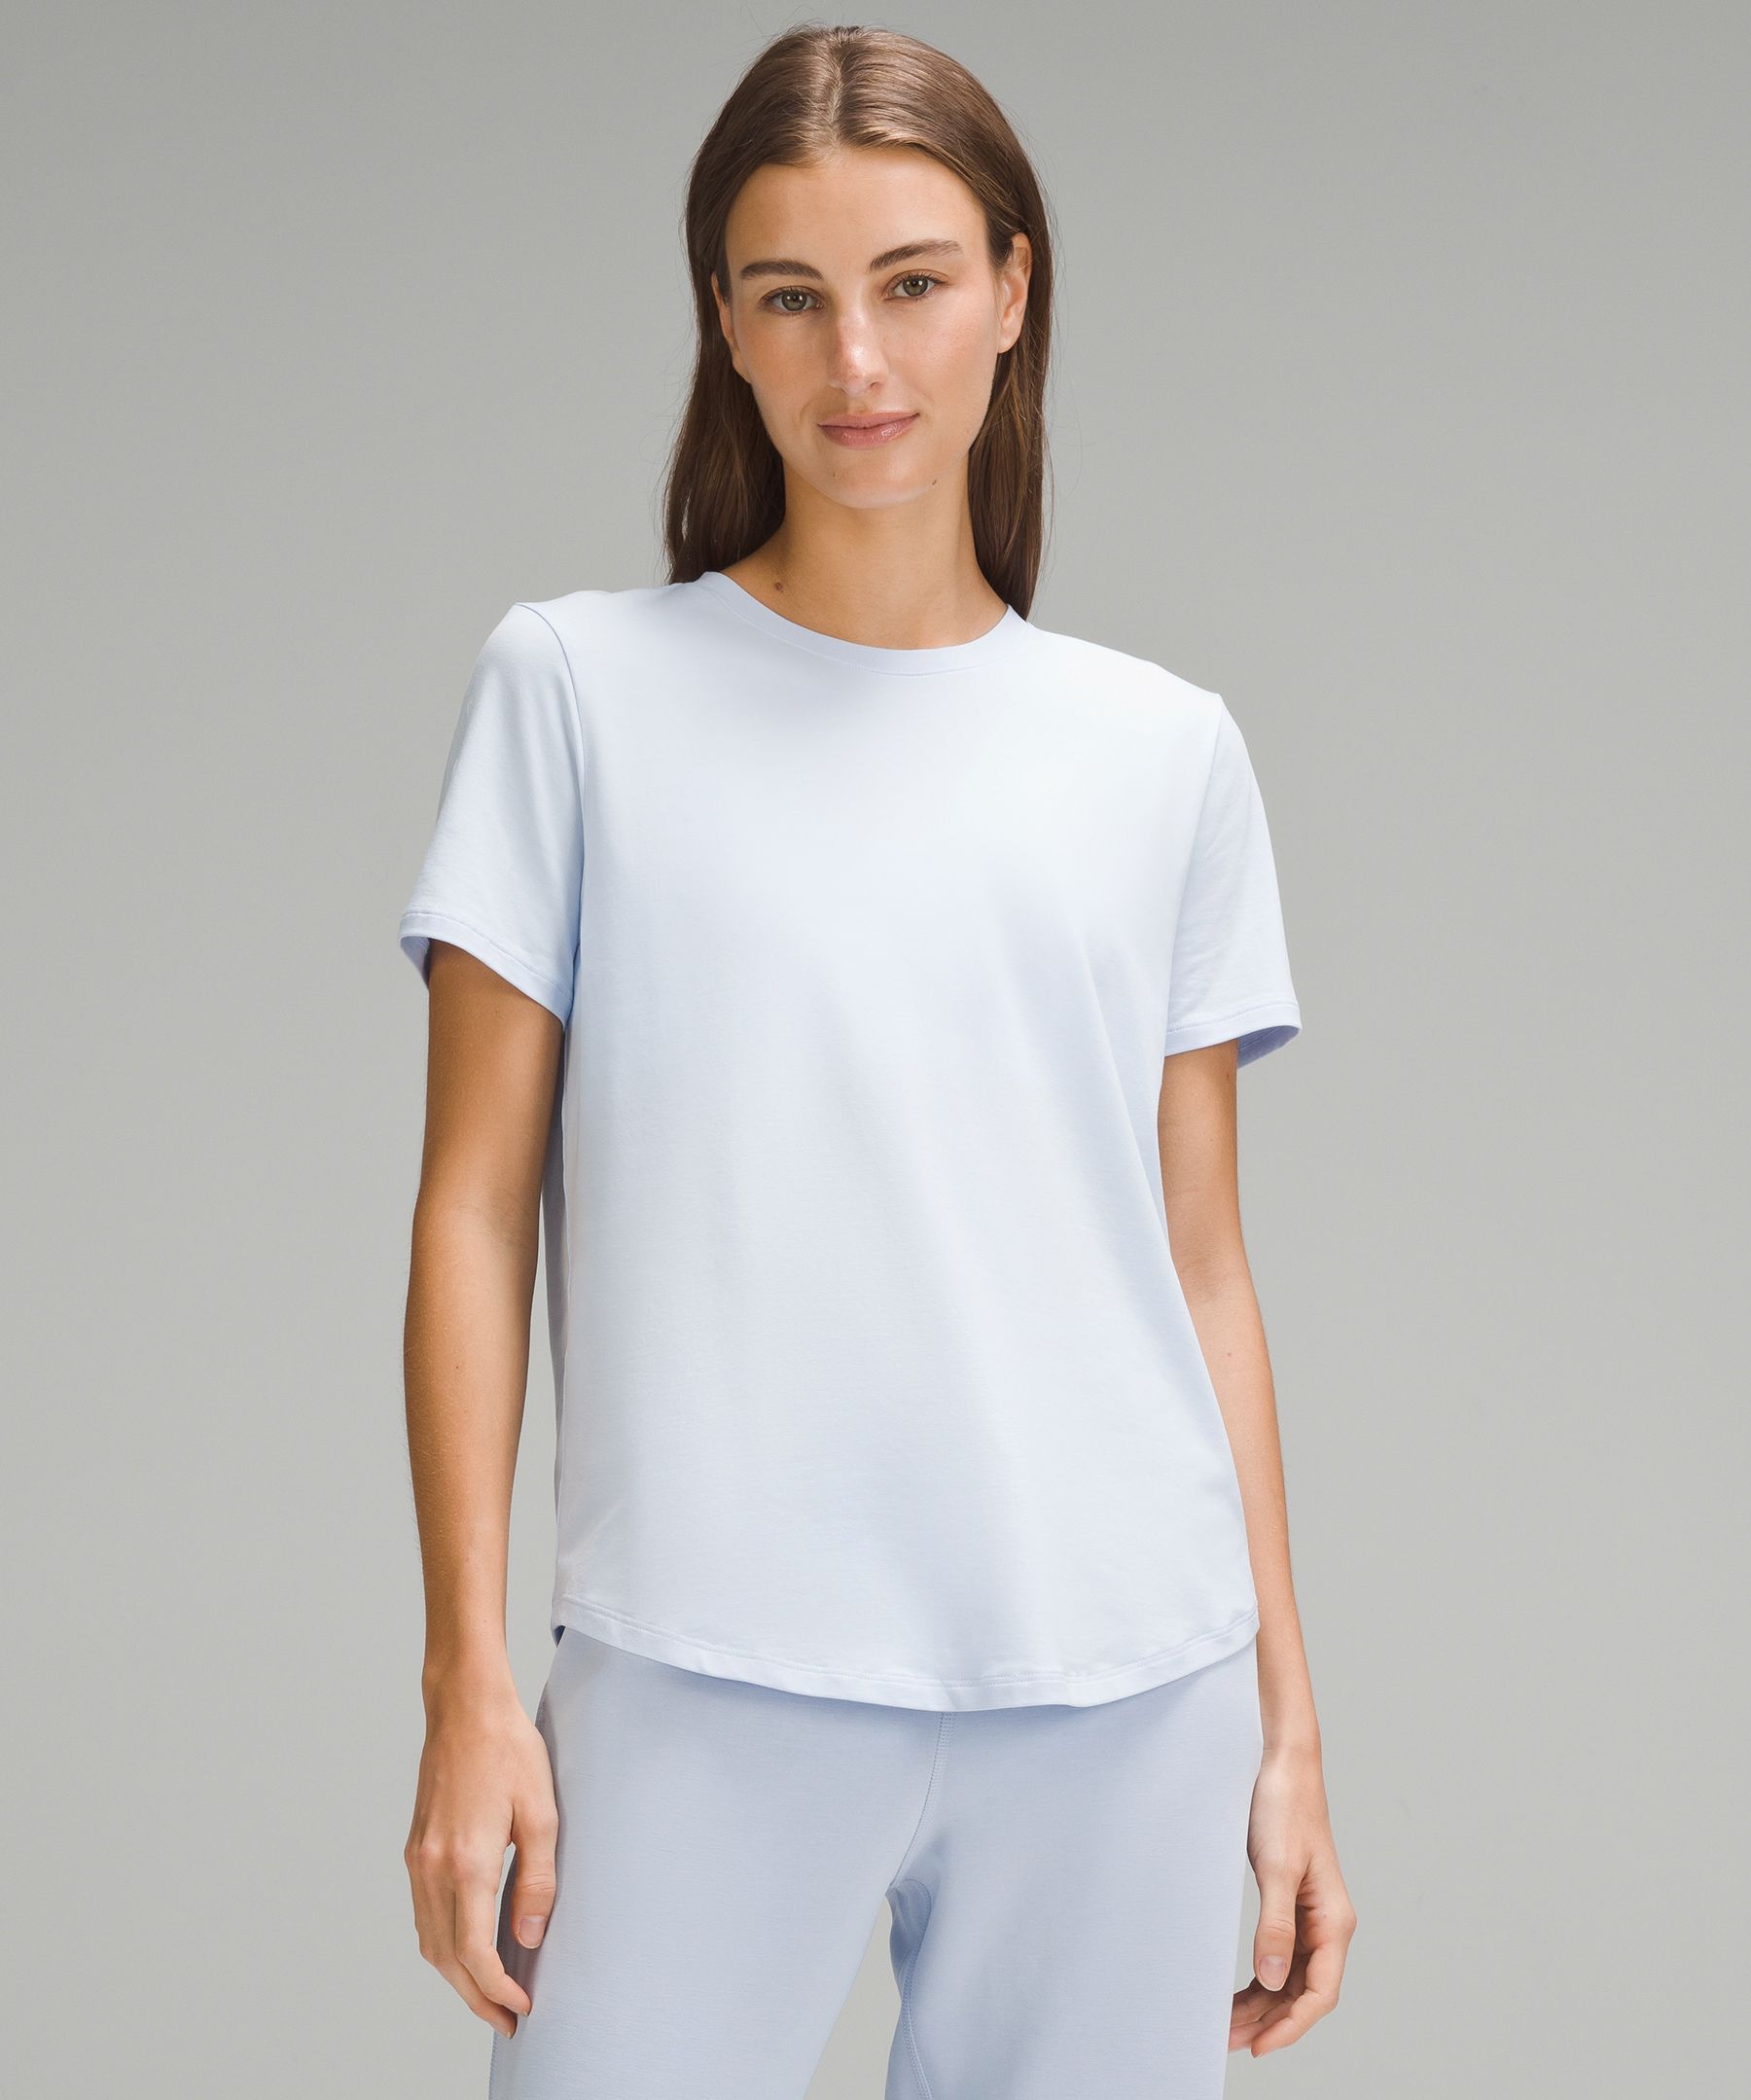 lululemon Align™ T-Shirt, Women's Short Sleeve Shirts & Tee's